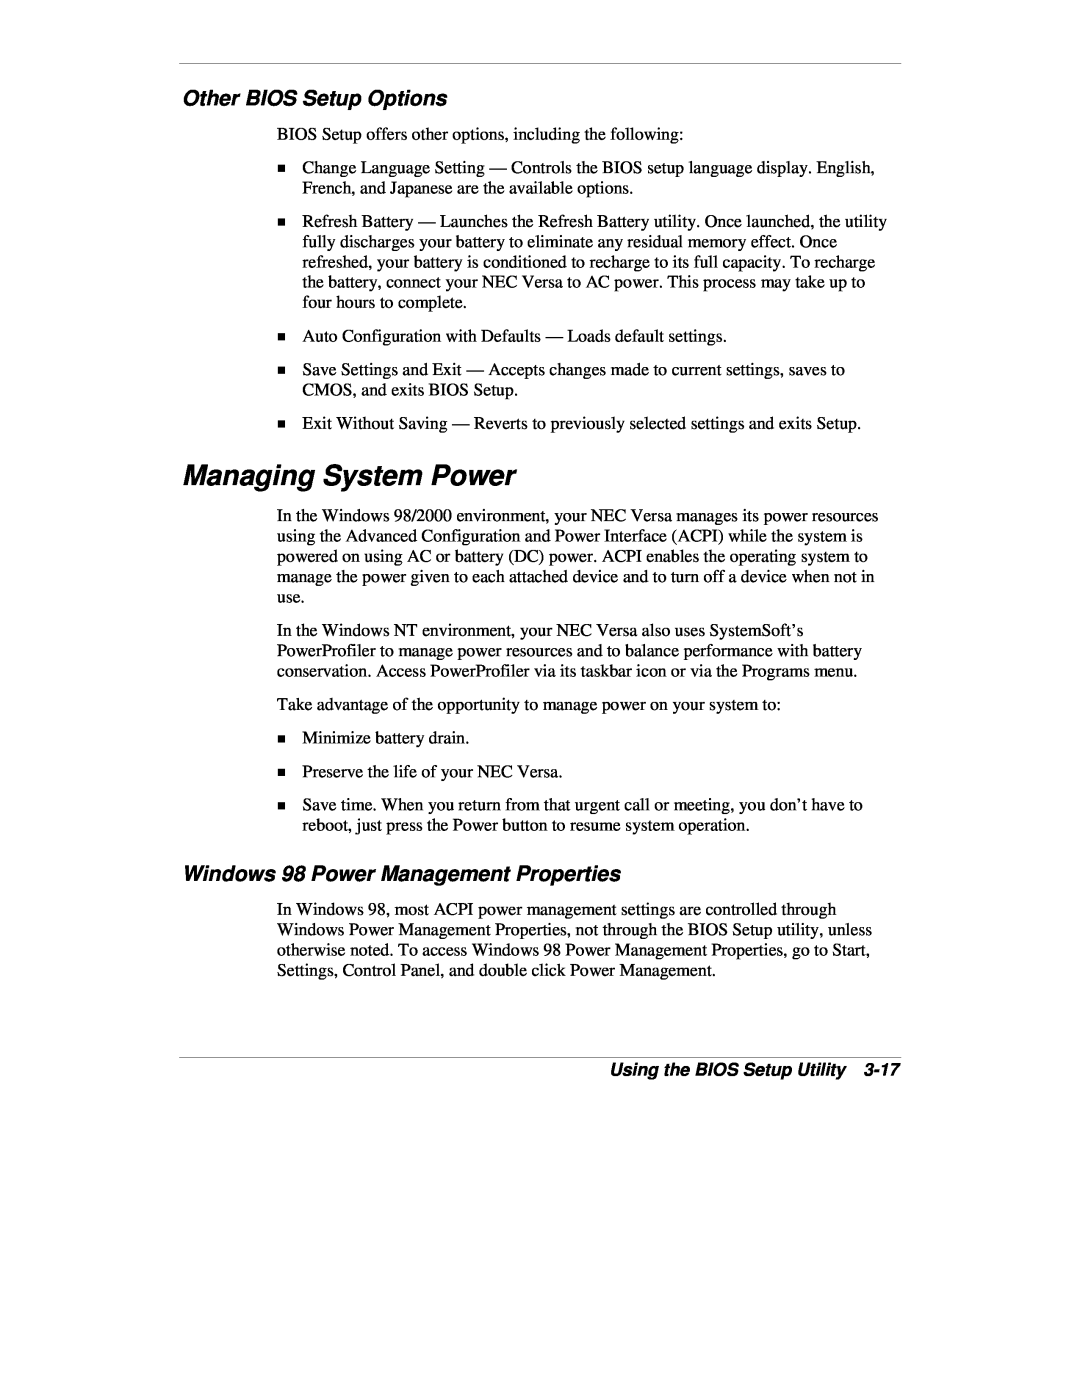 NEC VXi manual Managing System Power, Other BIOS Setup Options, Windows 98 Power Management Properties 